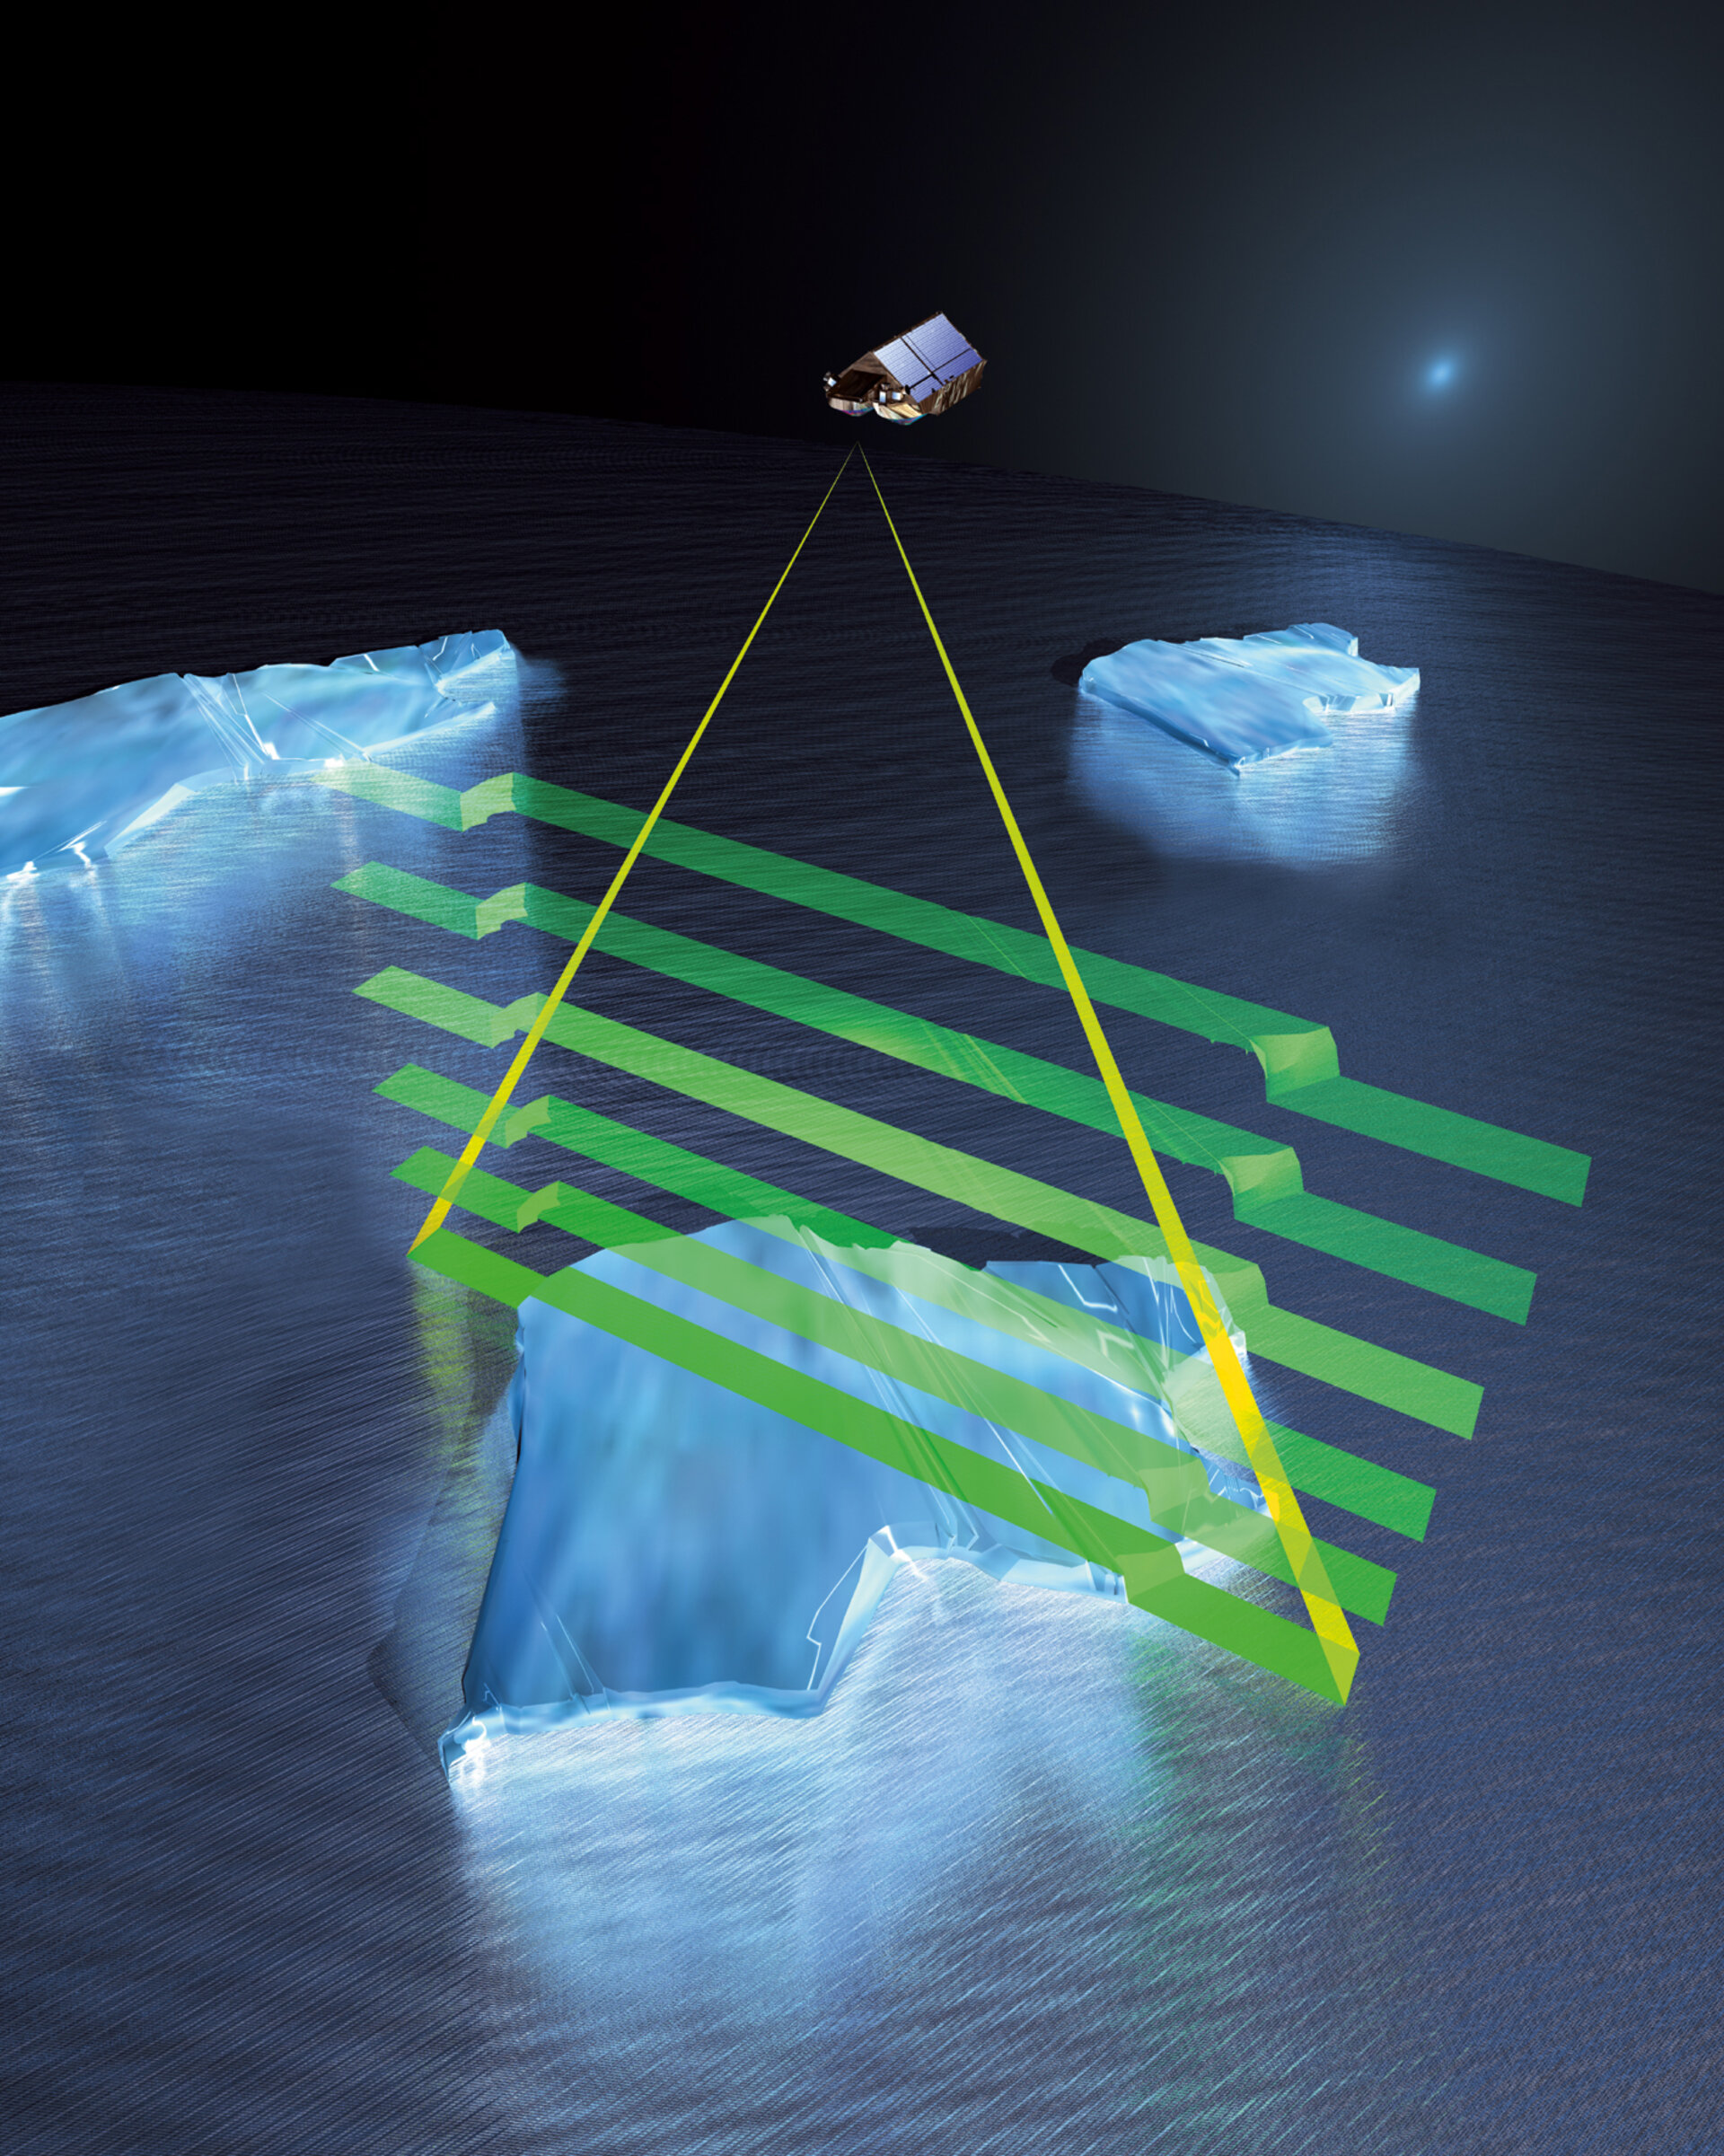 CryoSat-2 measuring sea-ice thickness